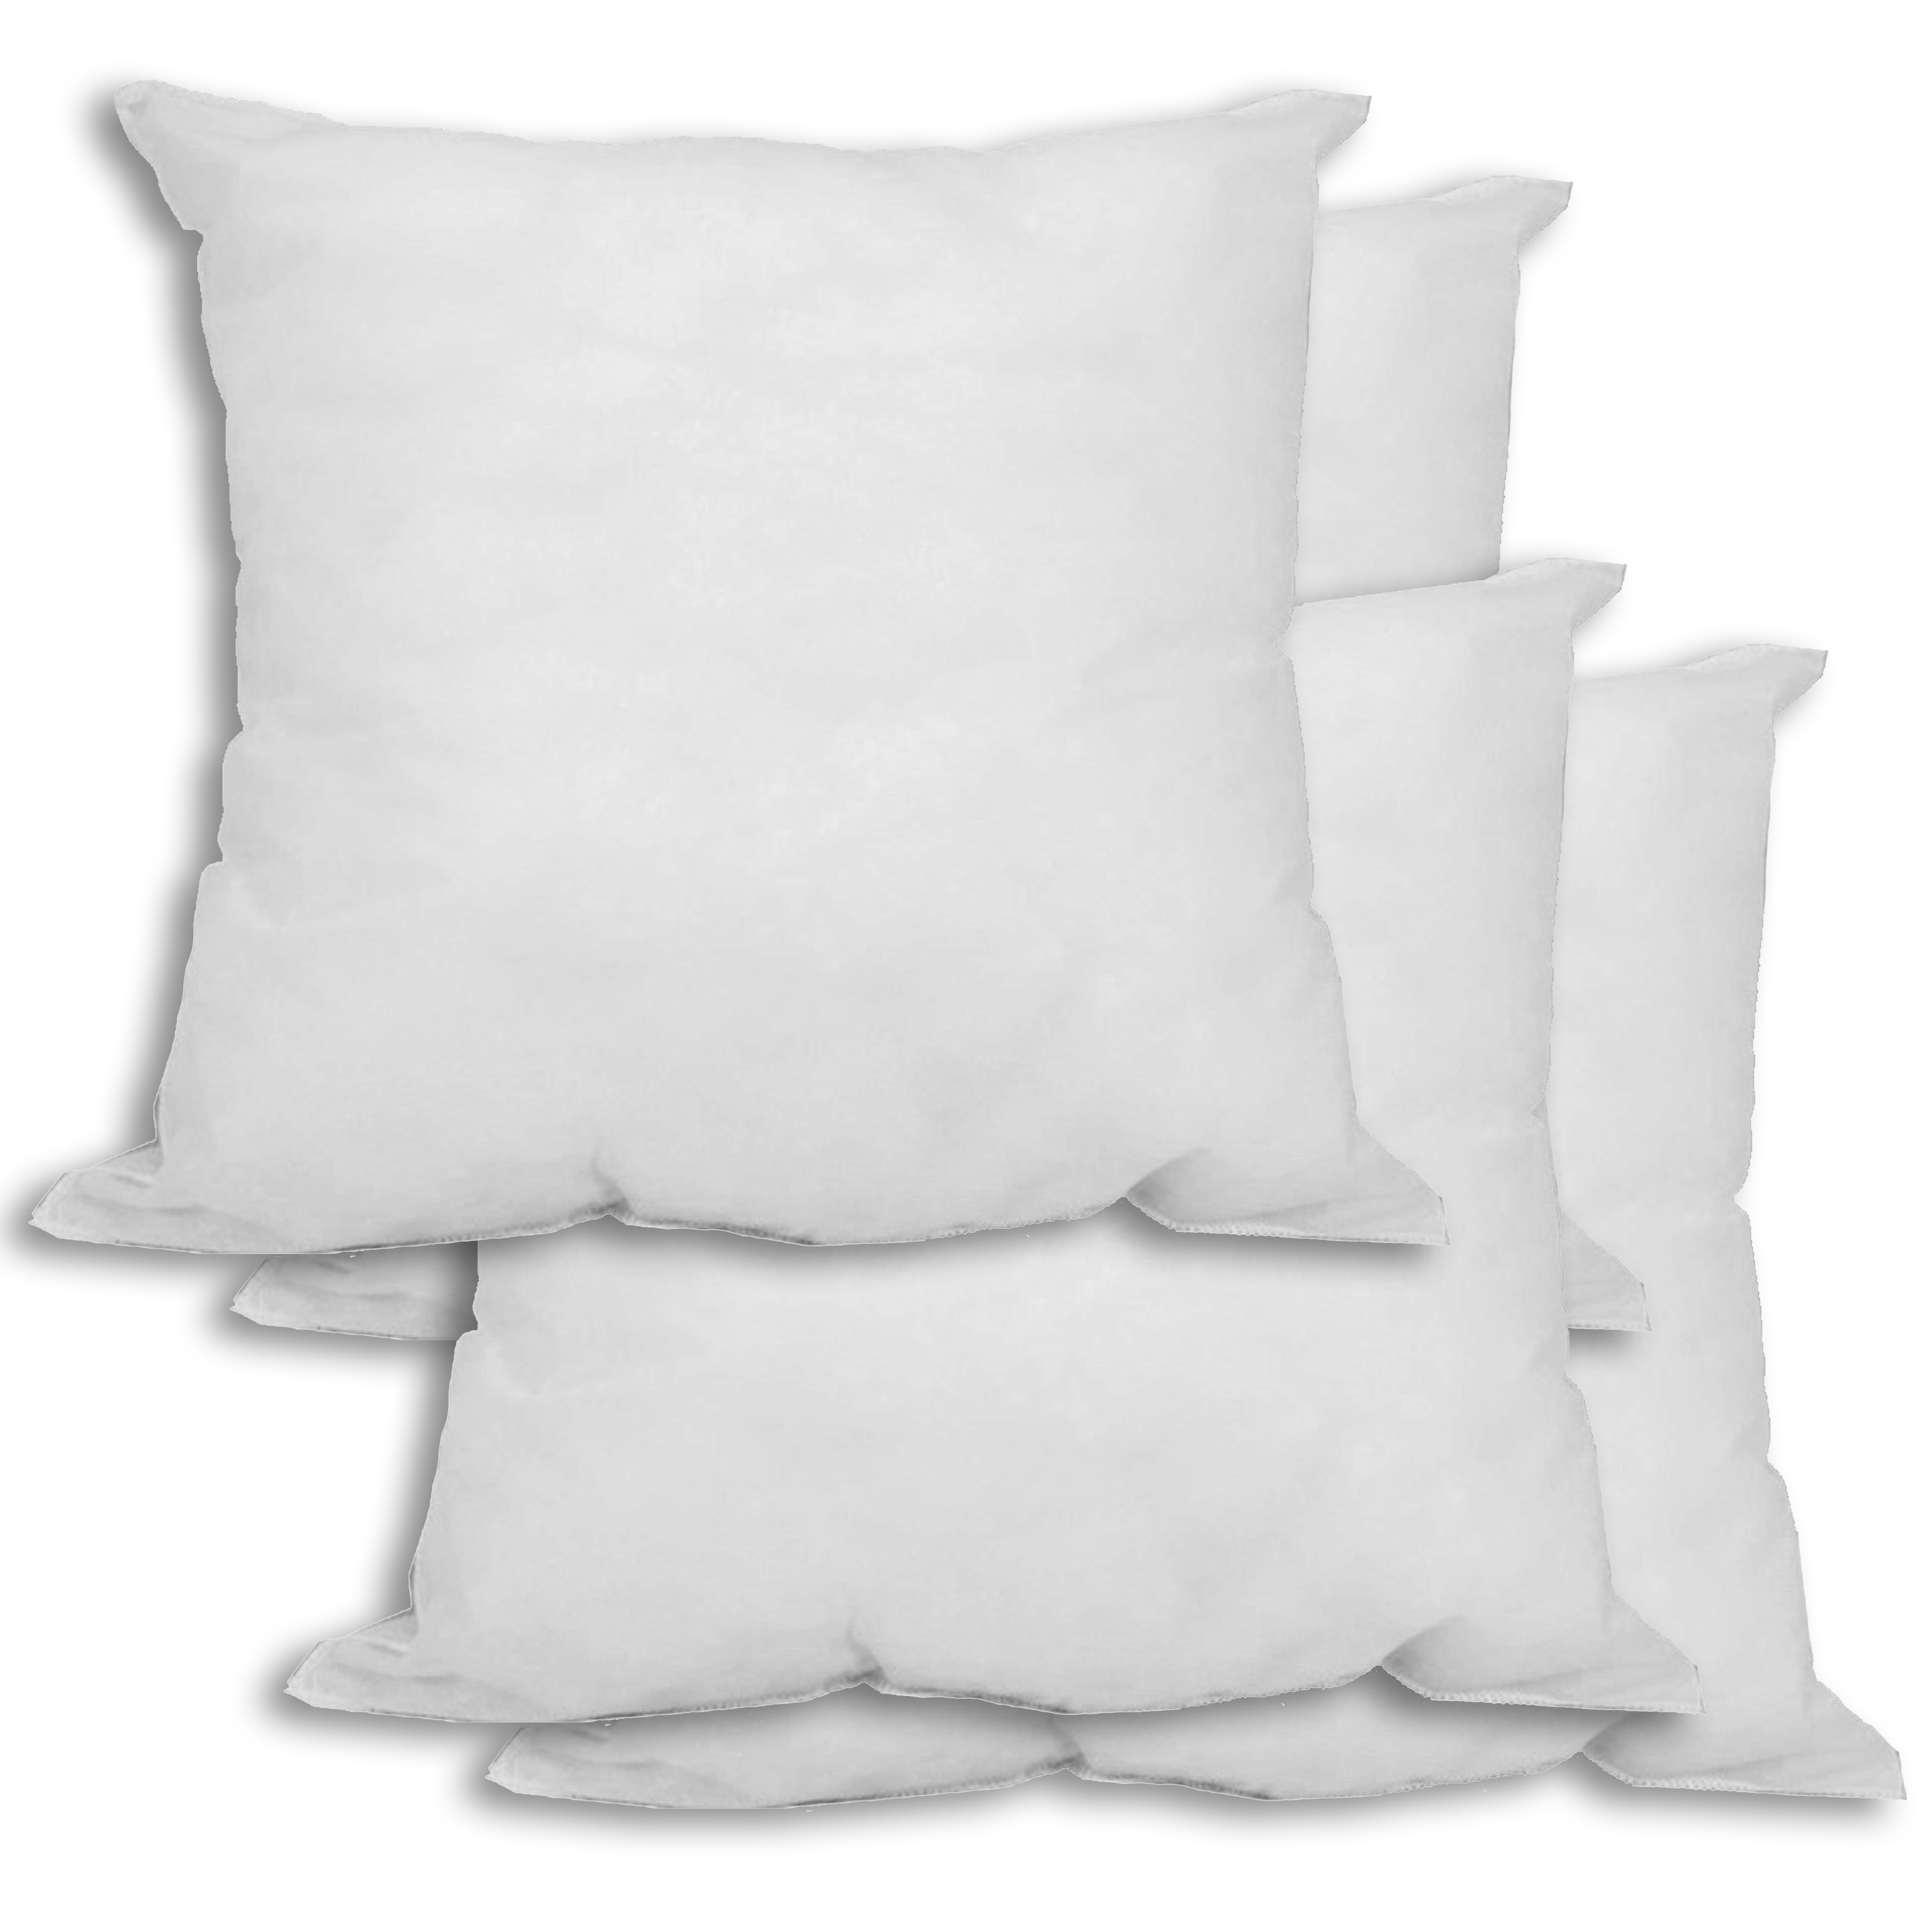 Set of 4 - 26 x 26 Premium Hypoallergenic Stuffer Pillow Insert, Square ...